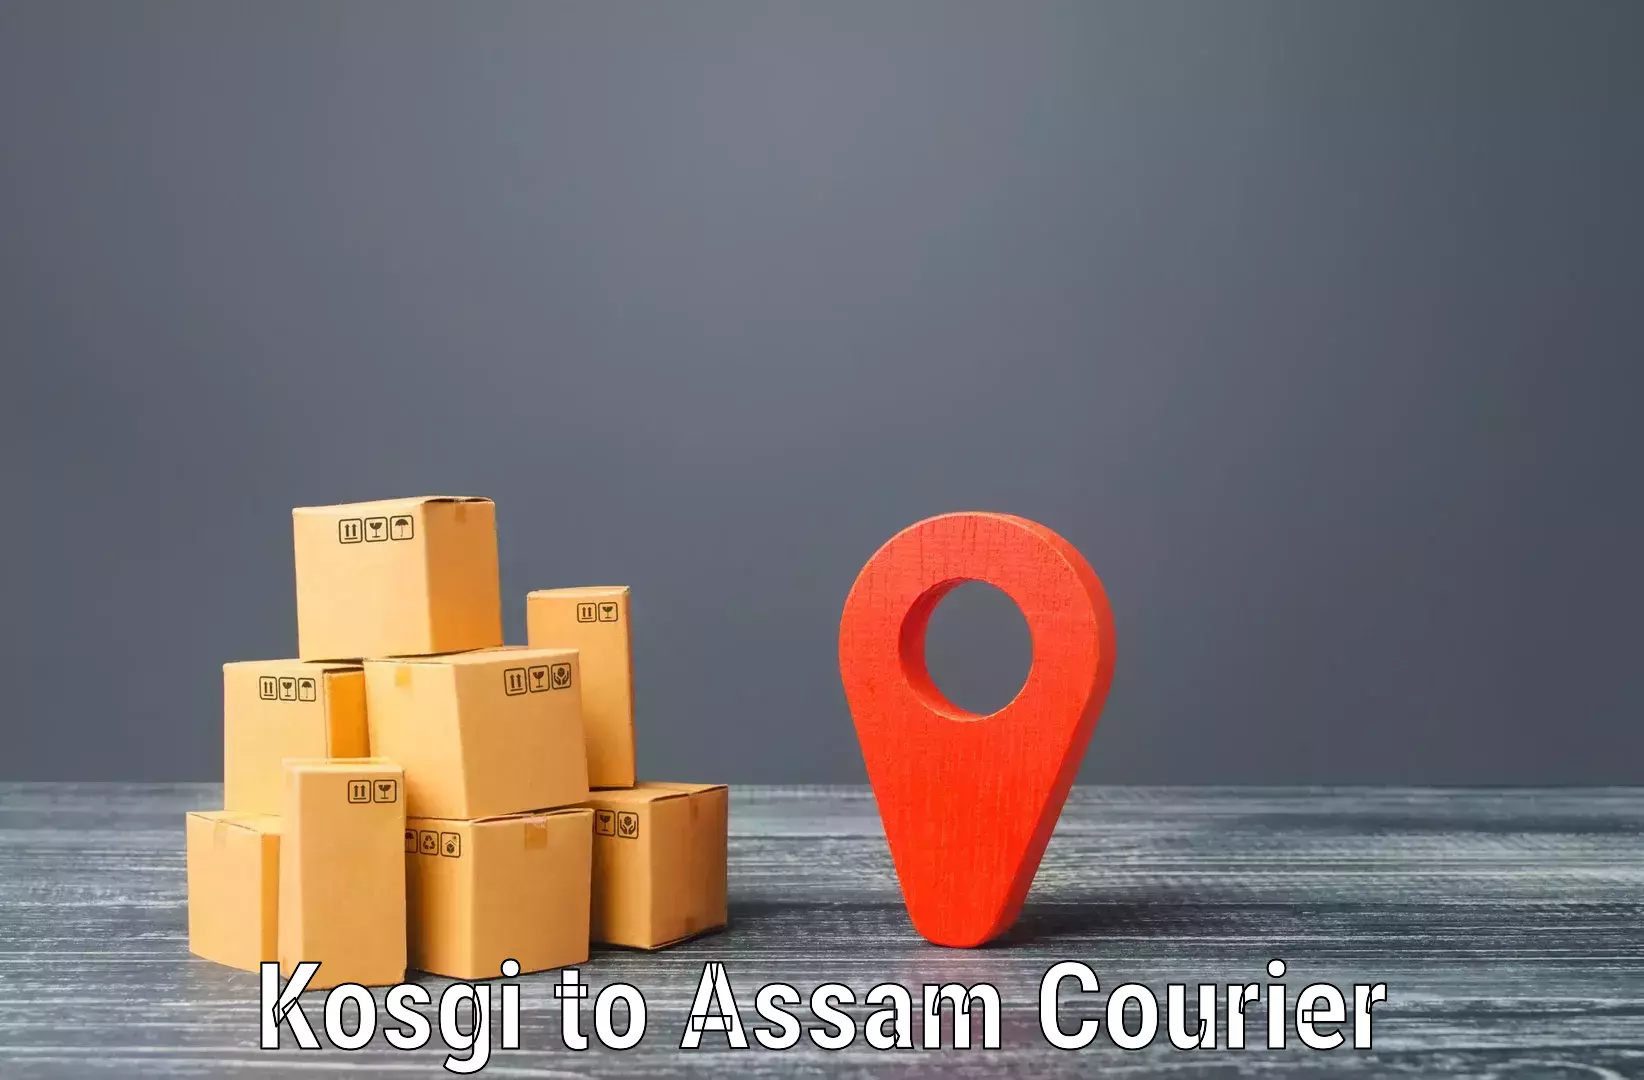 Quick dispatch service Kosgi to Assam